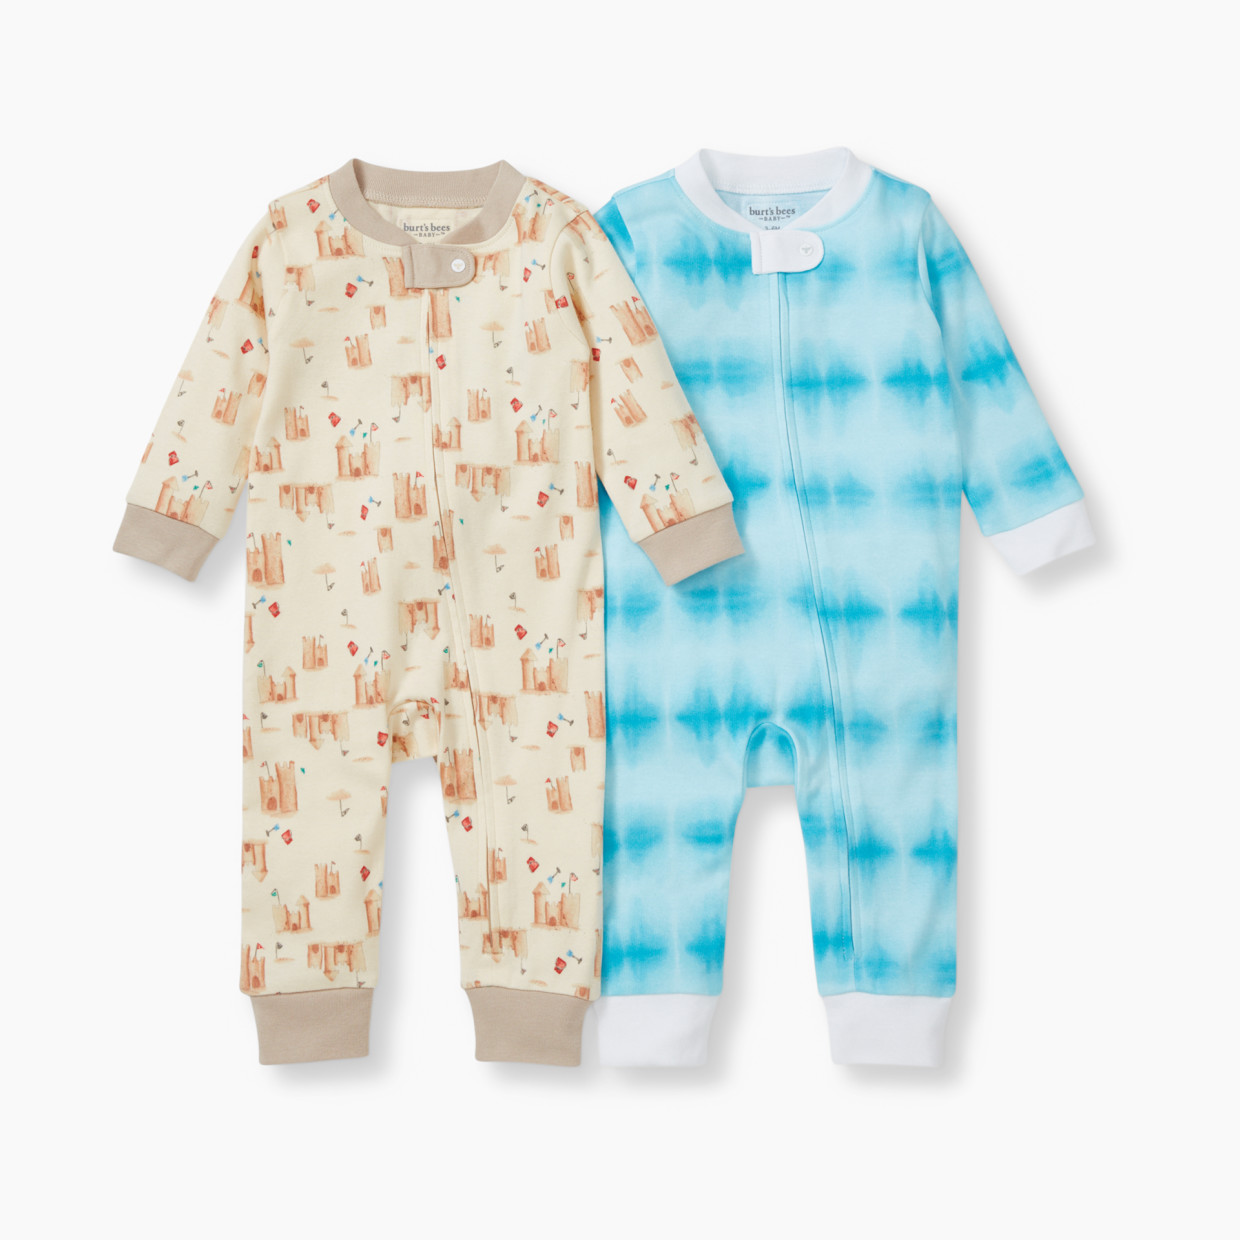 Burt's Bees Baby 2 Pack Sleep & Play Pajamas Organic Cotton - Tan/Blue, 0-3 Months.